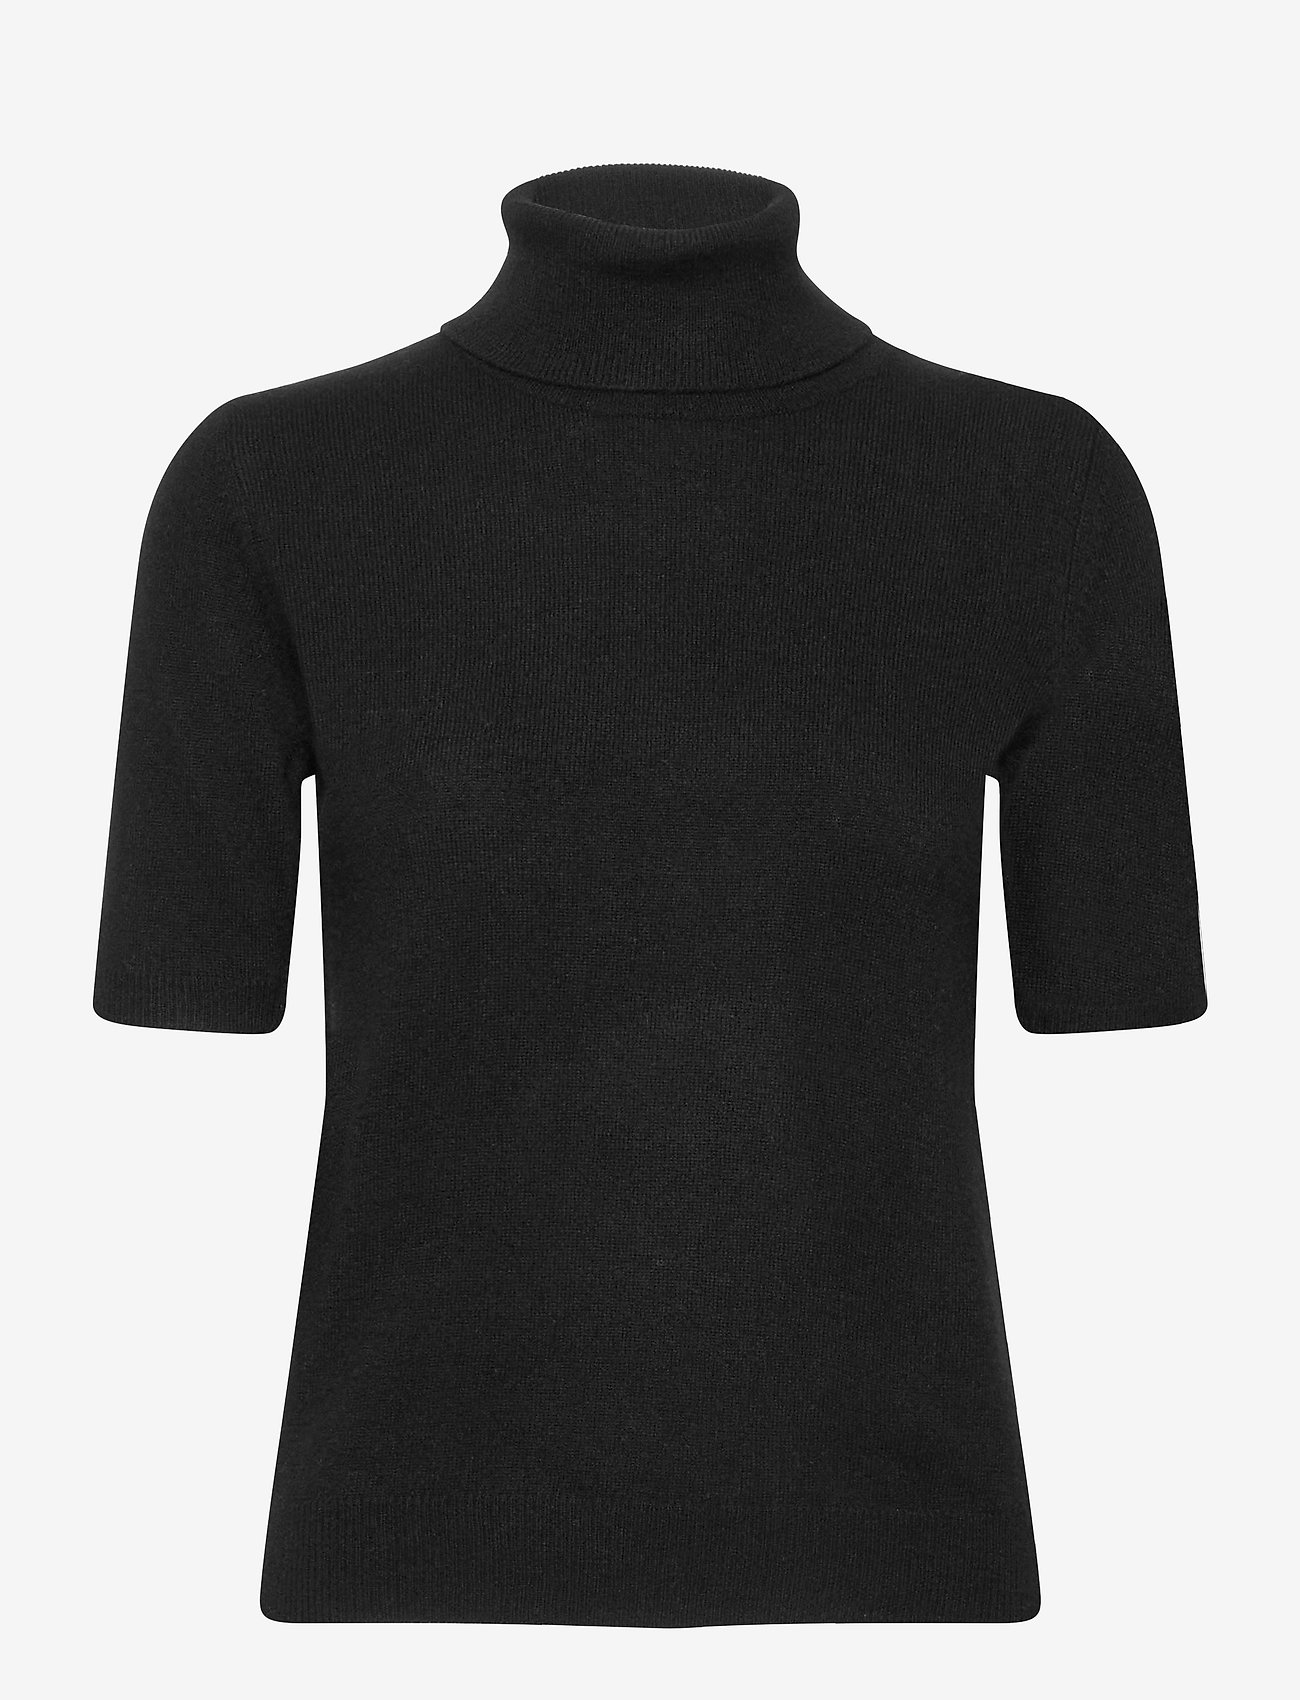 Davida Cashmere - Turtleneck T-shirt - rullekraver - black - 0